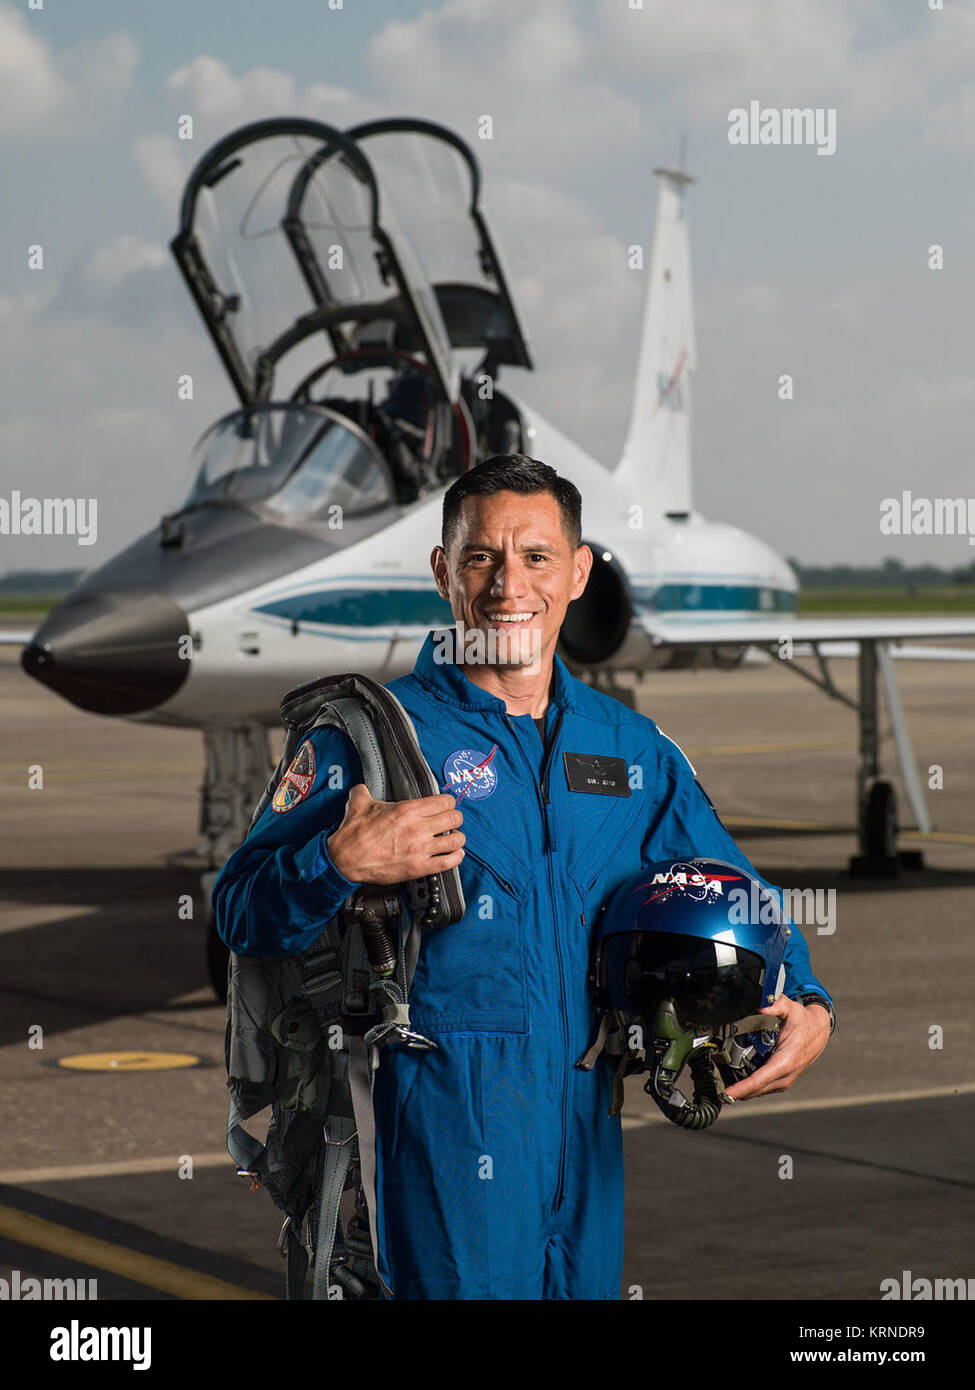 2017 NASA Astronaut Candidate - Frank Rubio.  Photo Date: June 6, 2017.  Location: Ellington Field - Hangar 276, Tarmac.  Photographer: Robert Markowitz Francisco Rubio portrait Stock Photo